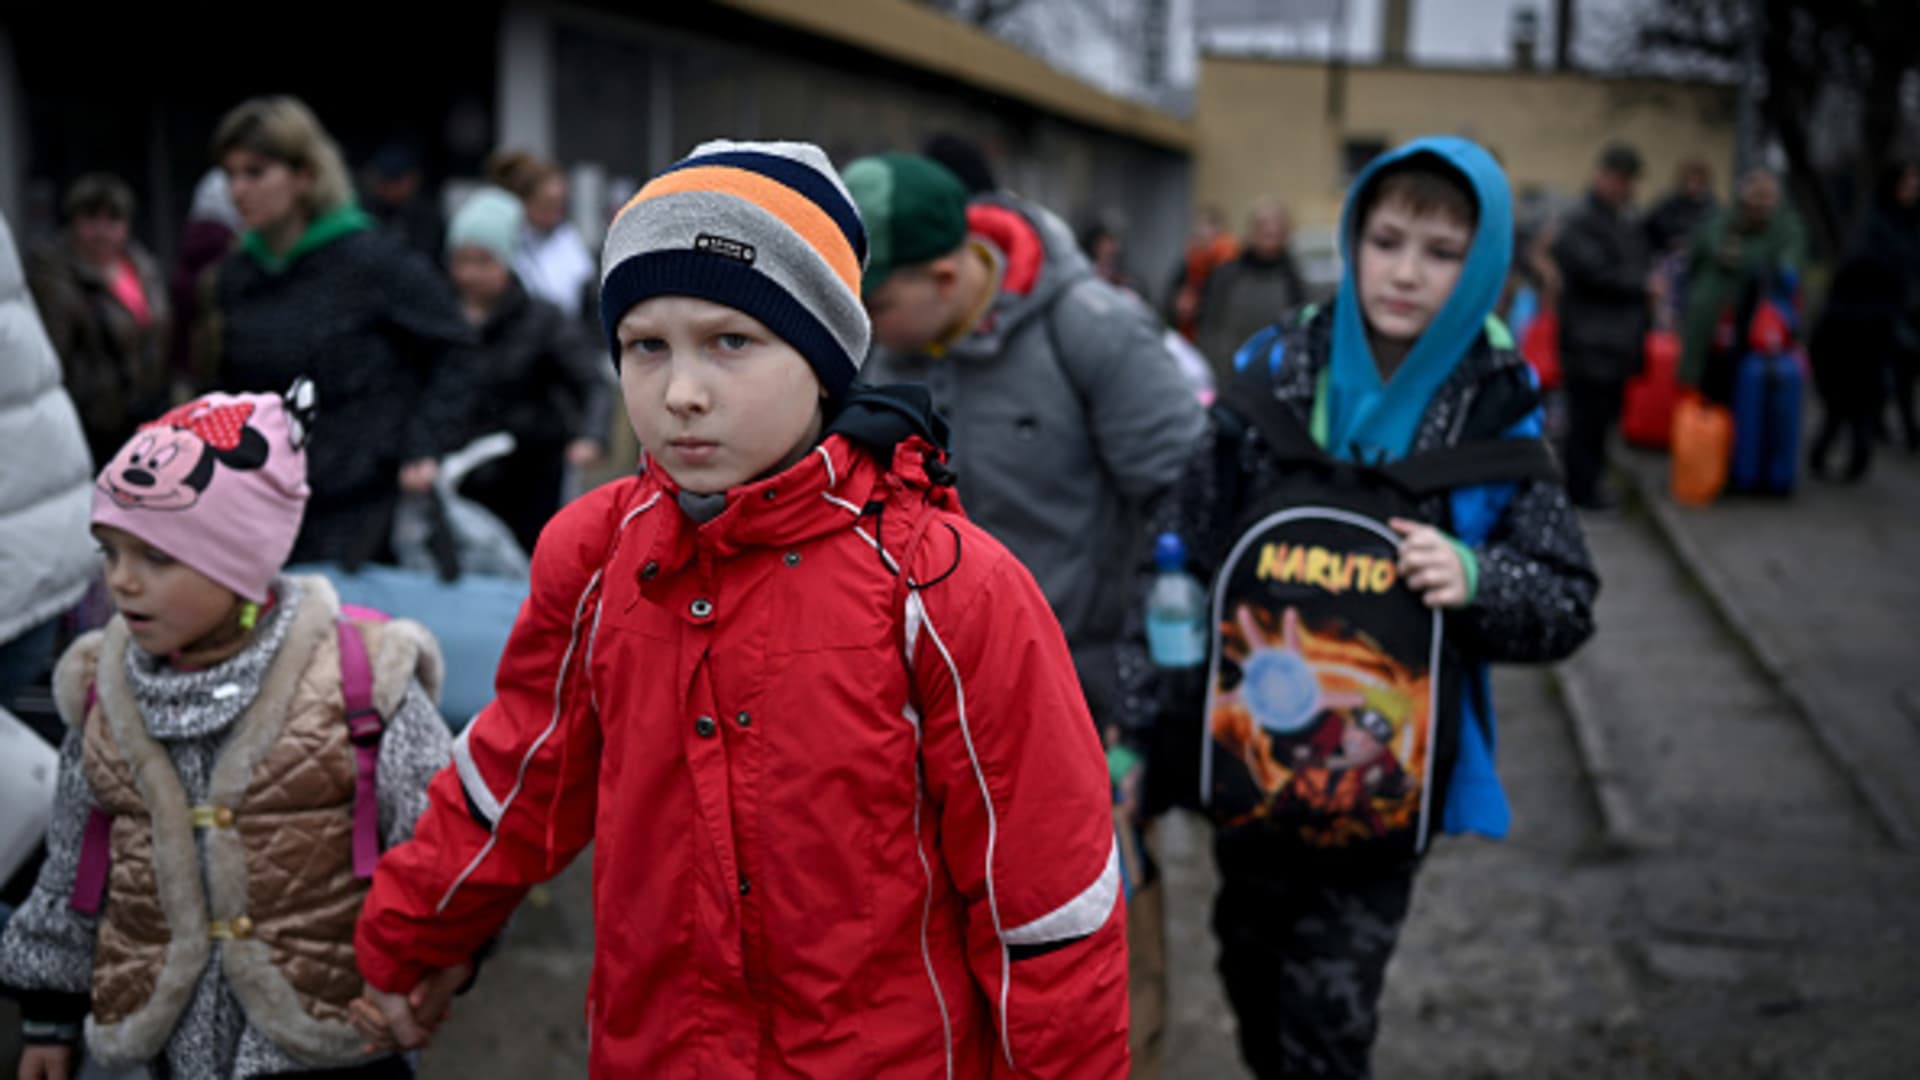 People, mainly women and children, make their way through Przemysl railway station after journeying from war-torn Ukraine on March 31, 2022 in Przemysl, Poland.